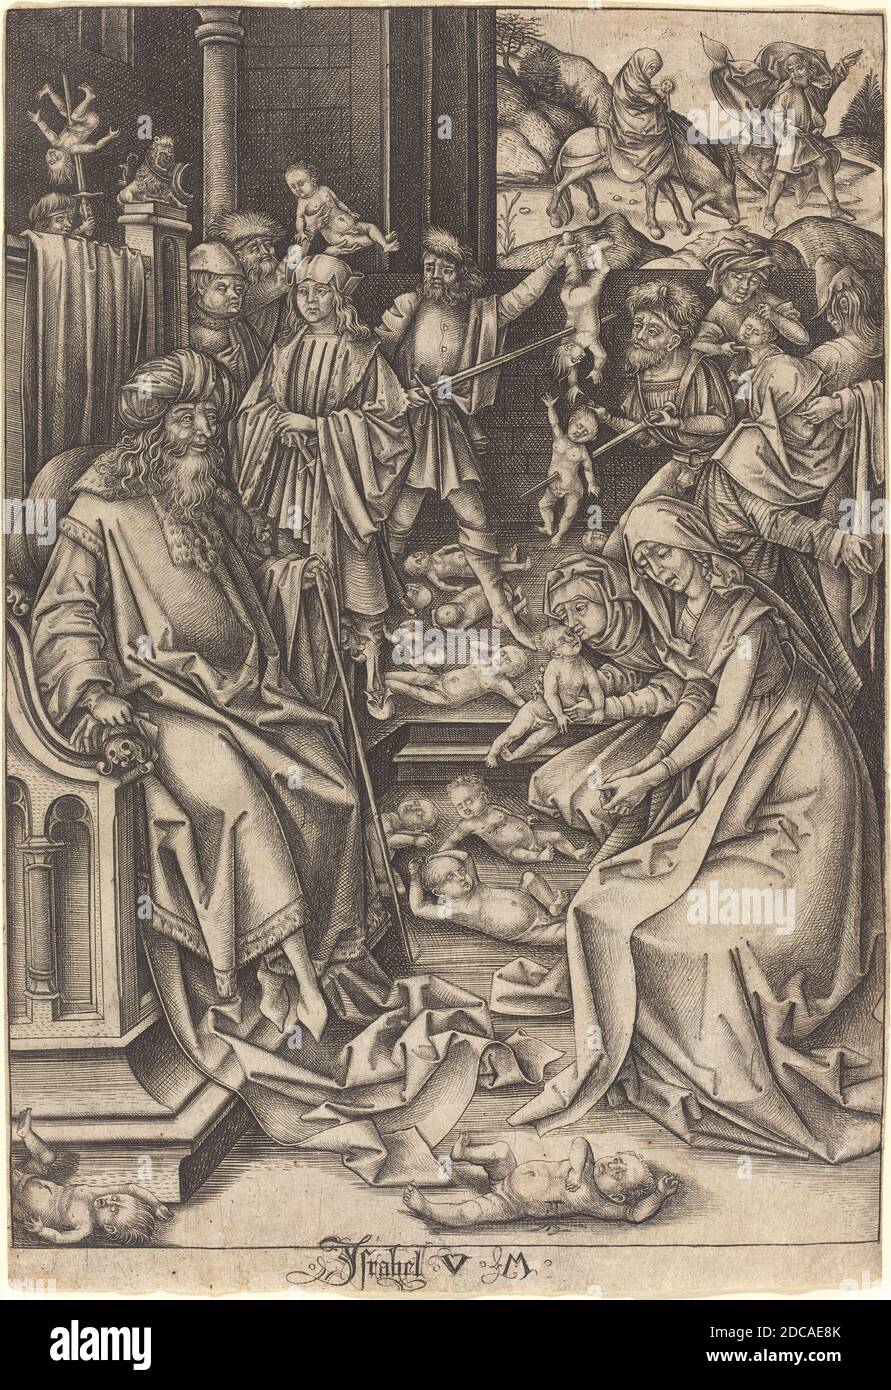 Israhel van Meckenem, (artist), German, c. 1445 - 1503, Hans Holbein the Elder, (artist after), German, c. 1465 - 1524, Massacre of the Innocents, The Life of the Virgin, (series), c. 1490/1500, engraving Stock Photo